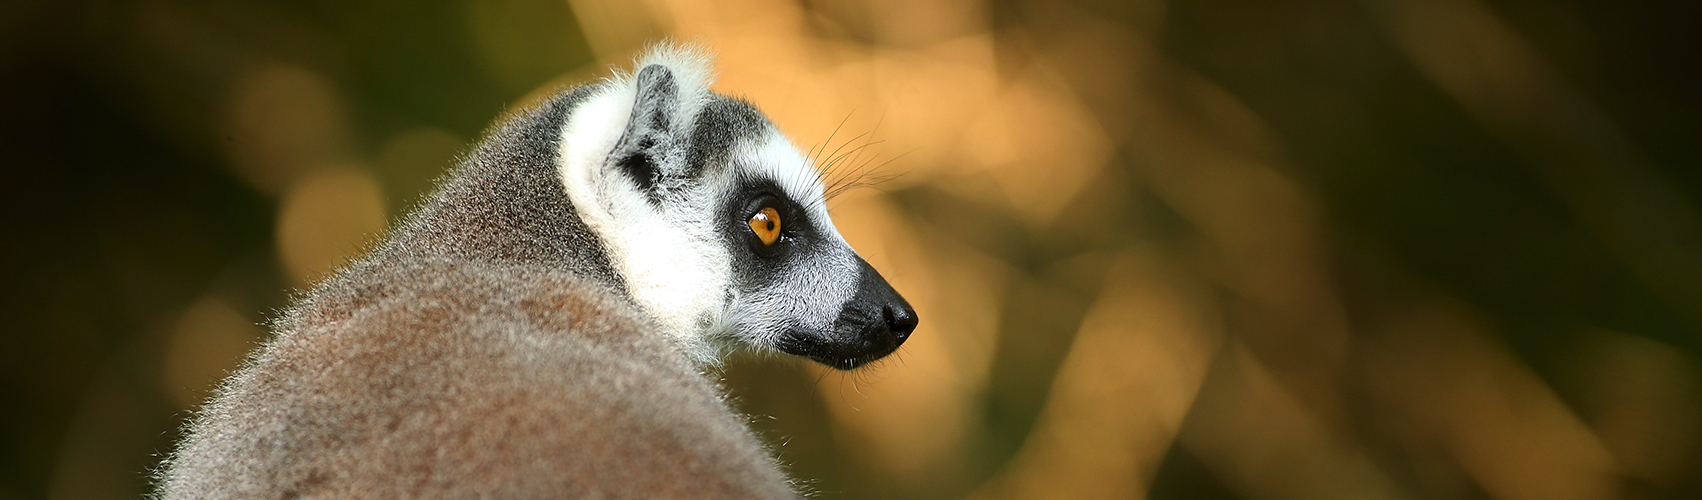 Reasons to Give - Duke Lemur Center